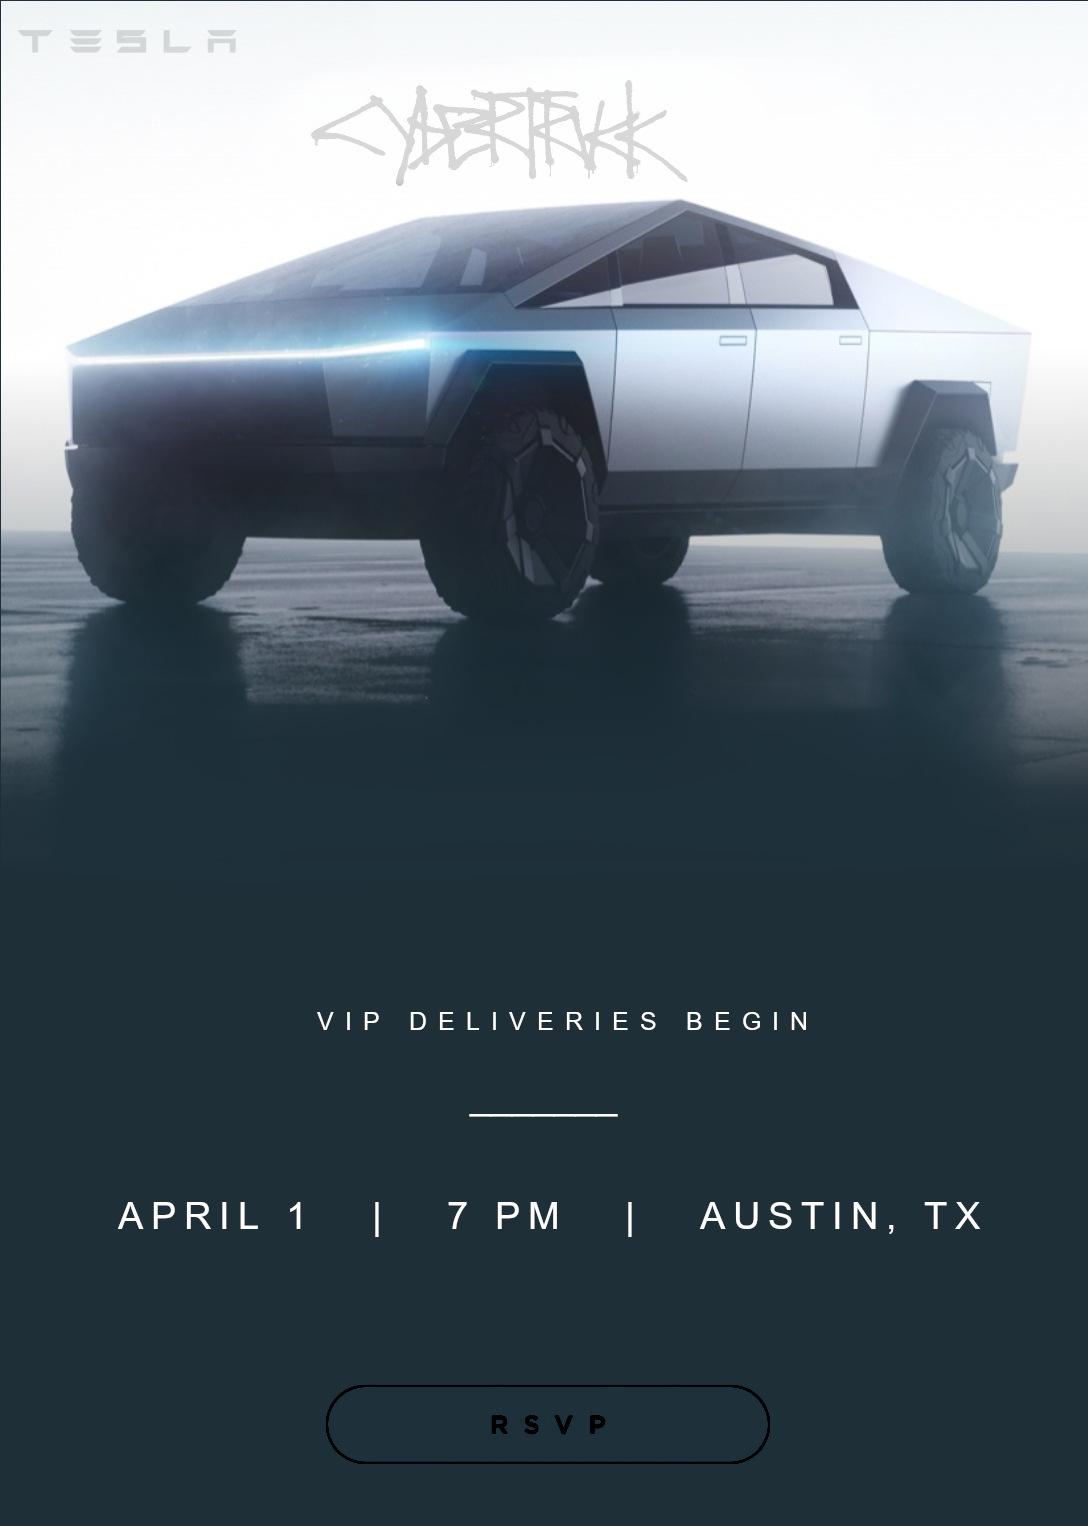 Tesla Cybertruck Hoping for a Cybertruck update June 10 tesla-CyberTruck-delivery-event-invitation_VIP